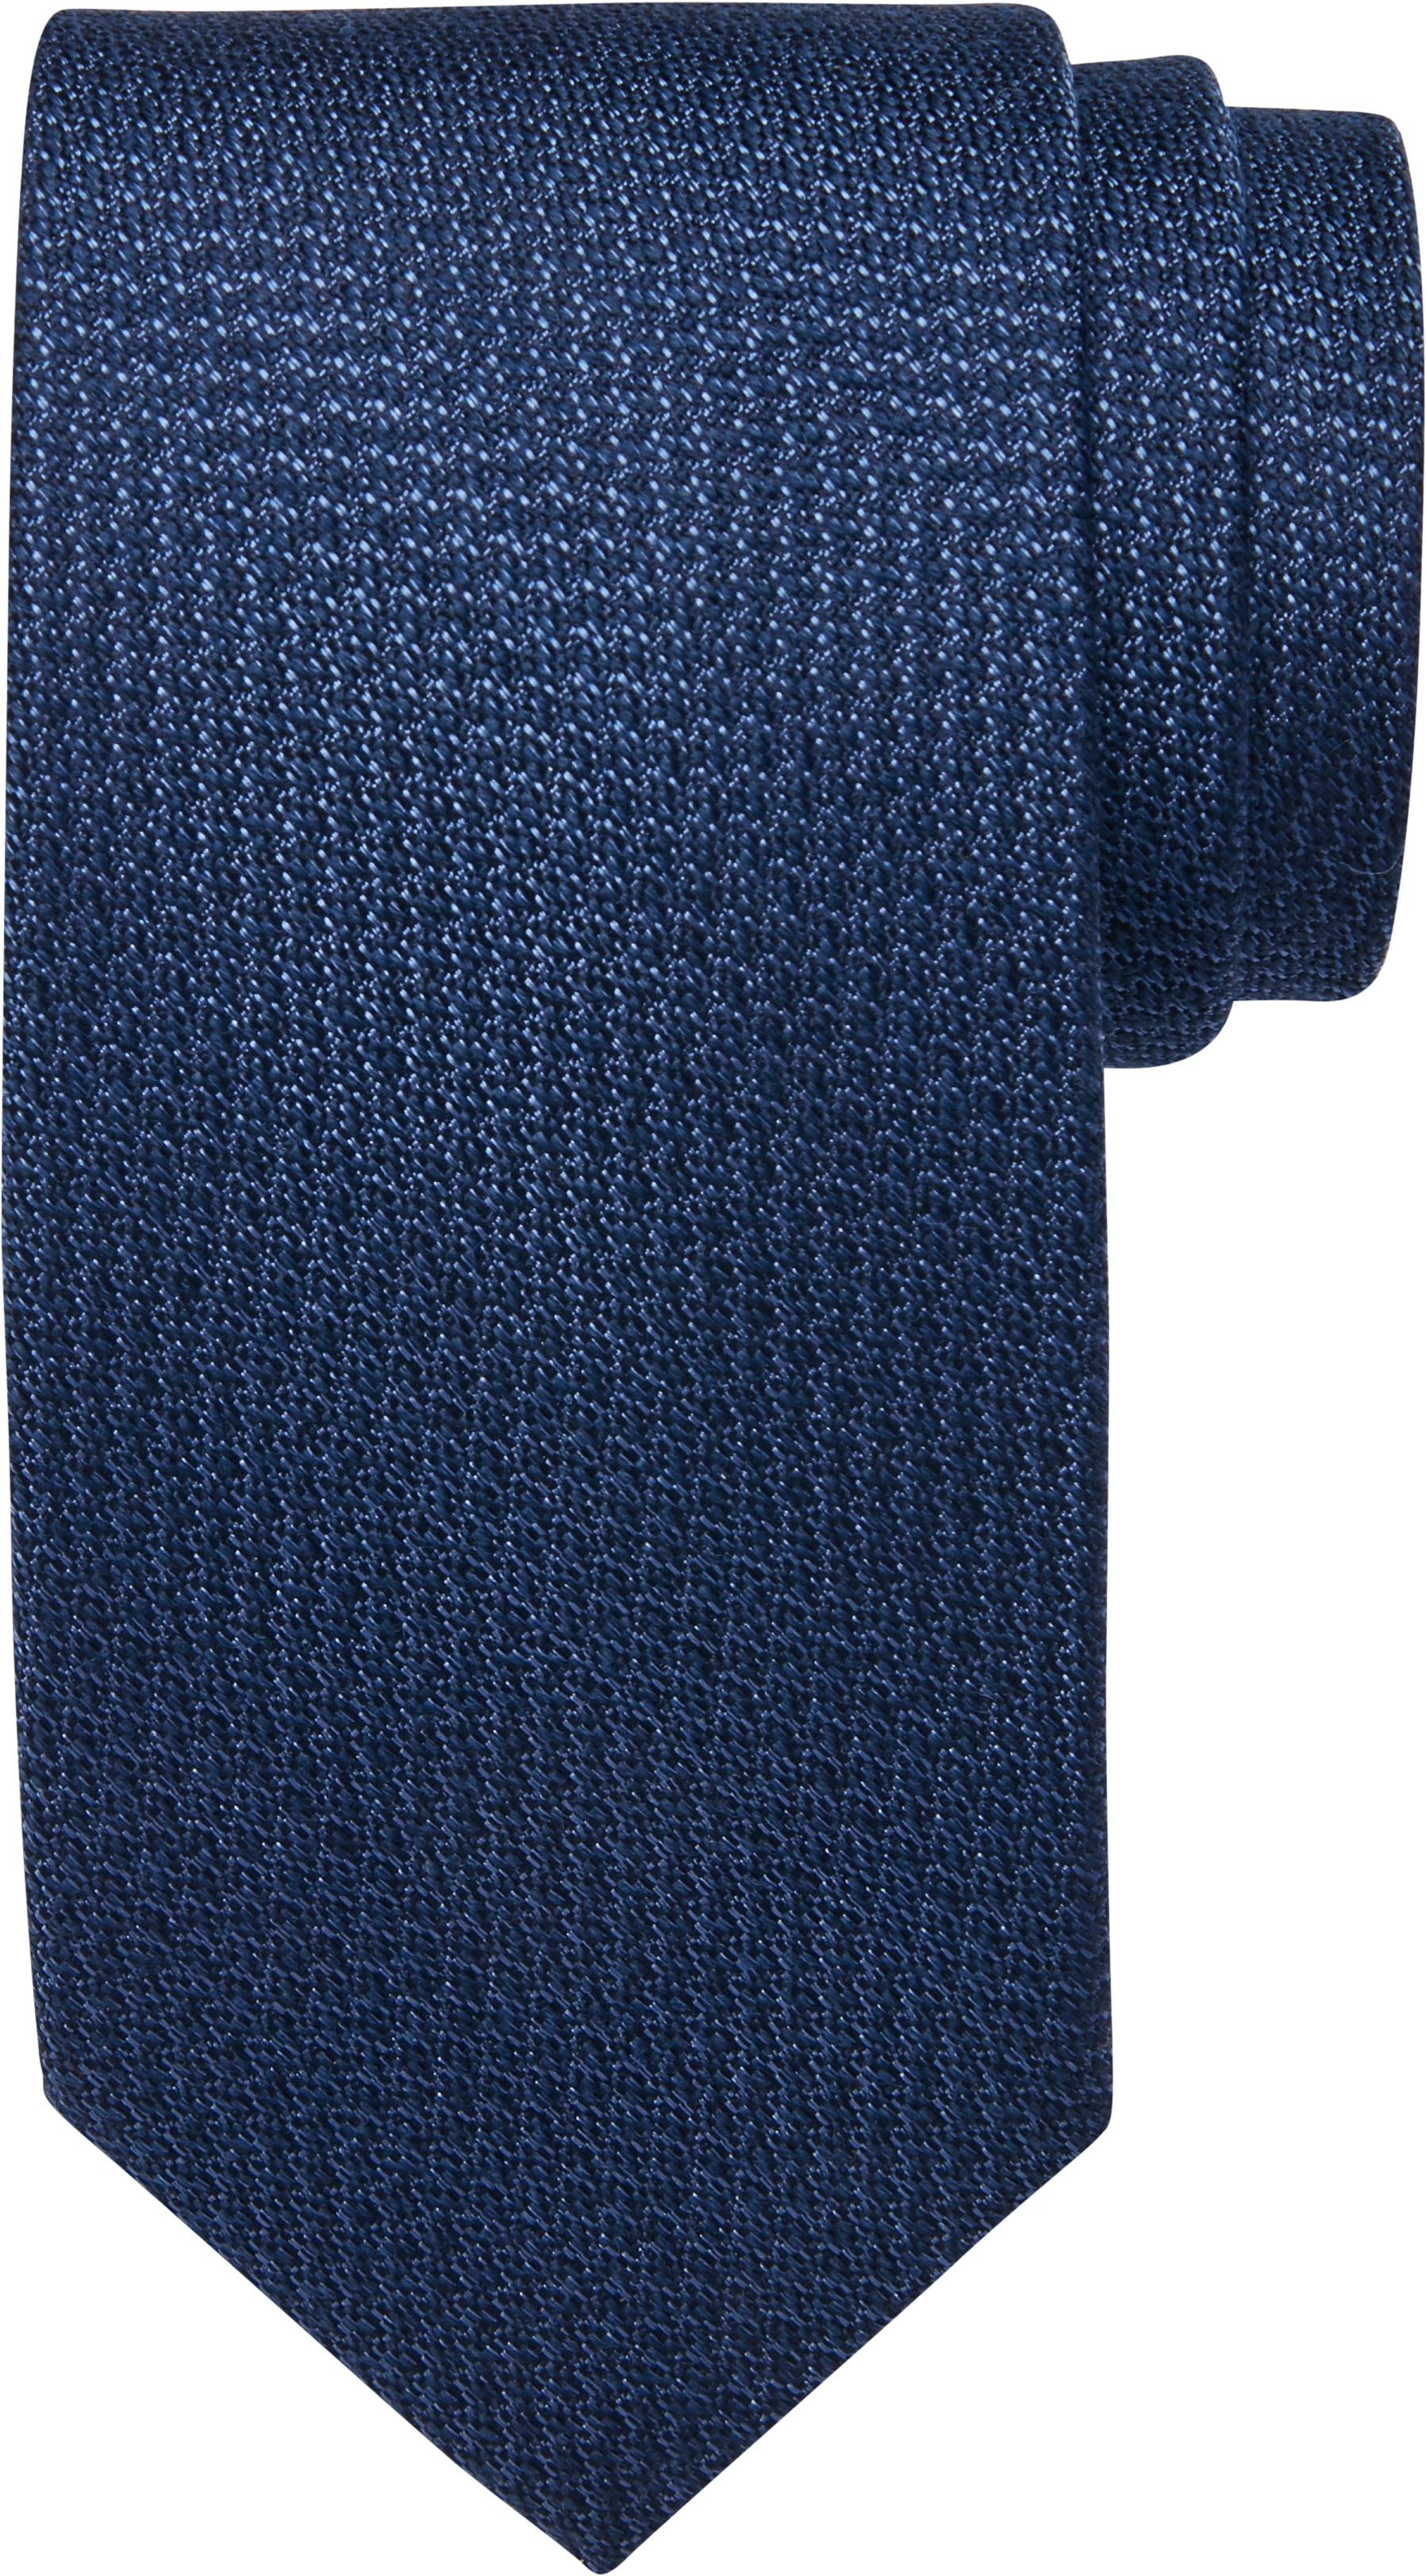 michael kors blue tie